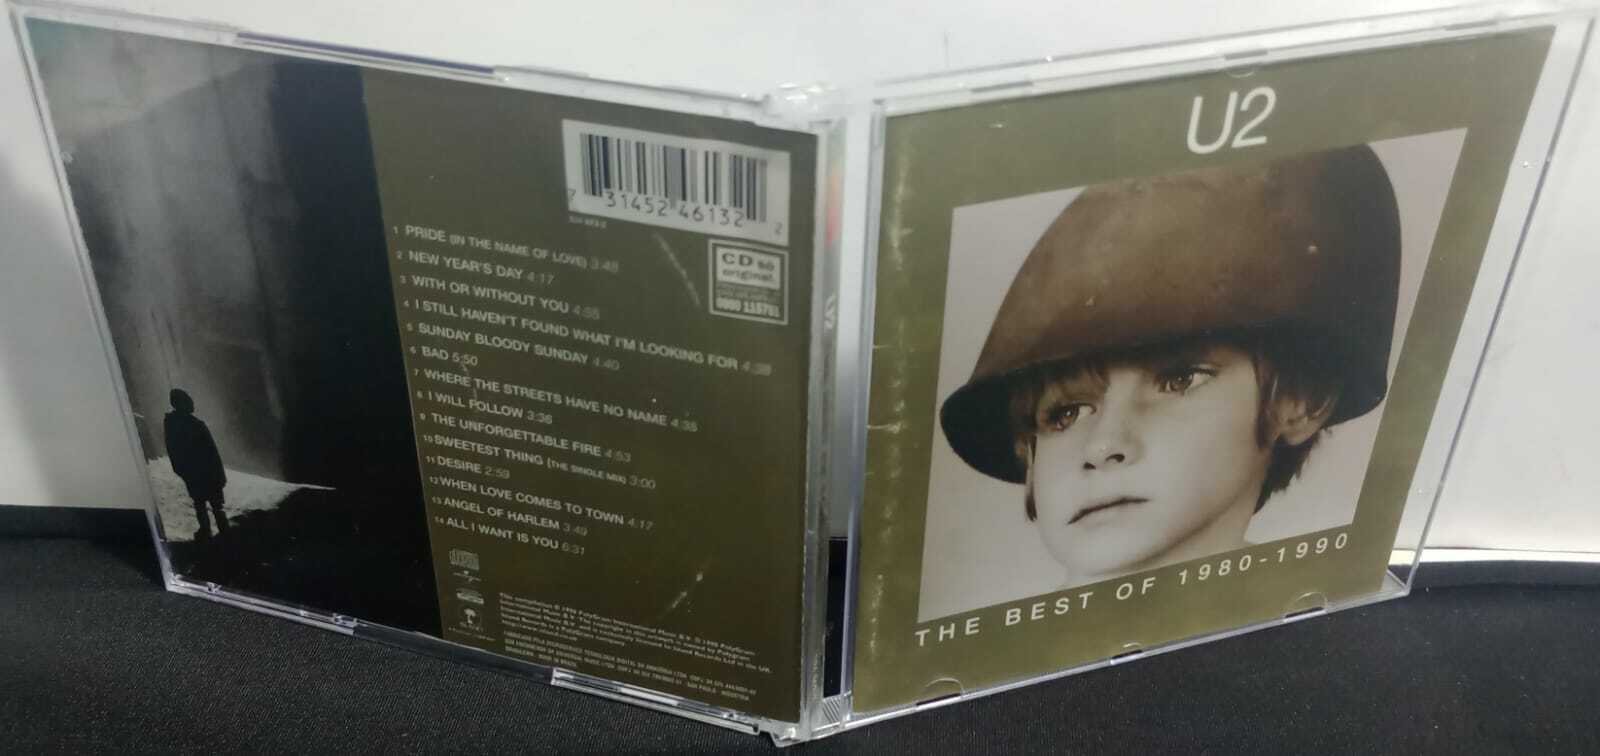 CD - U2 - the Best of 1980-1990